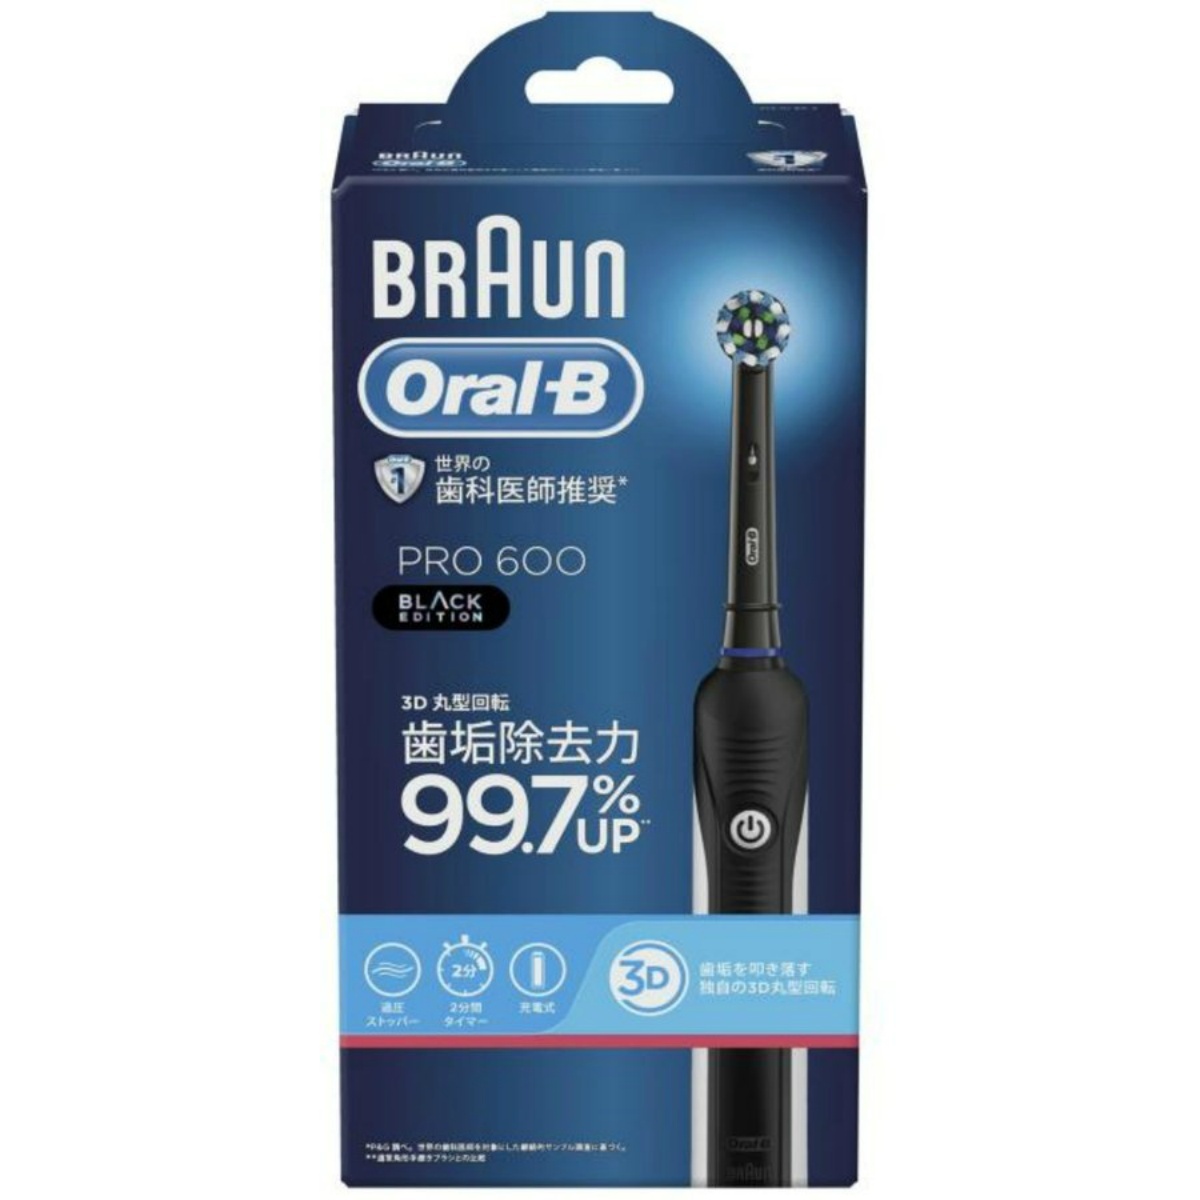 BRAUN オーラルB PRO600 ブラックエディションZ オーラルB 電動歯ブラシ本体の商品画像